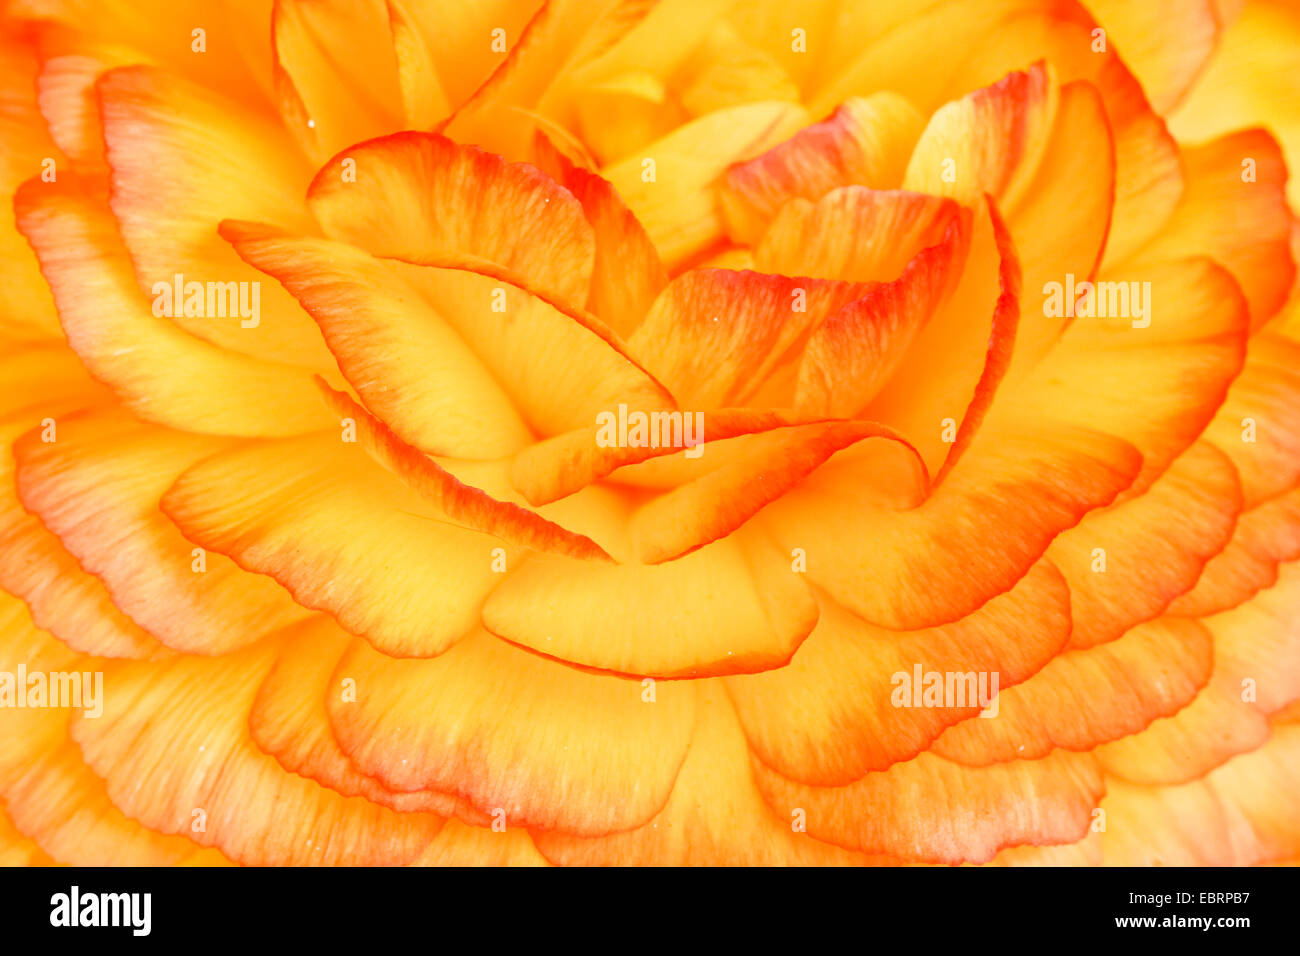 Persian Buttercup, Turban Ranunculus, Turban buttercup (Ranunculus asiaticus, Ranunculus hortensis), detail of an orange-yellow filled flower, Germany Stock Photo